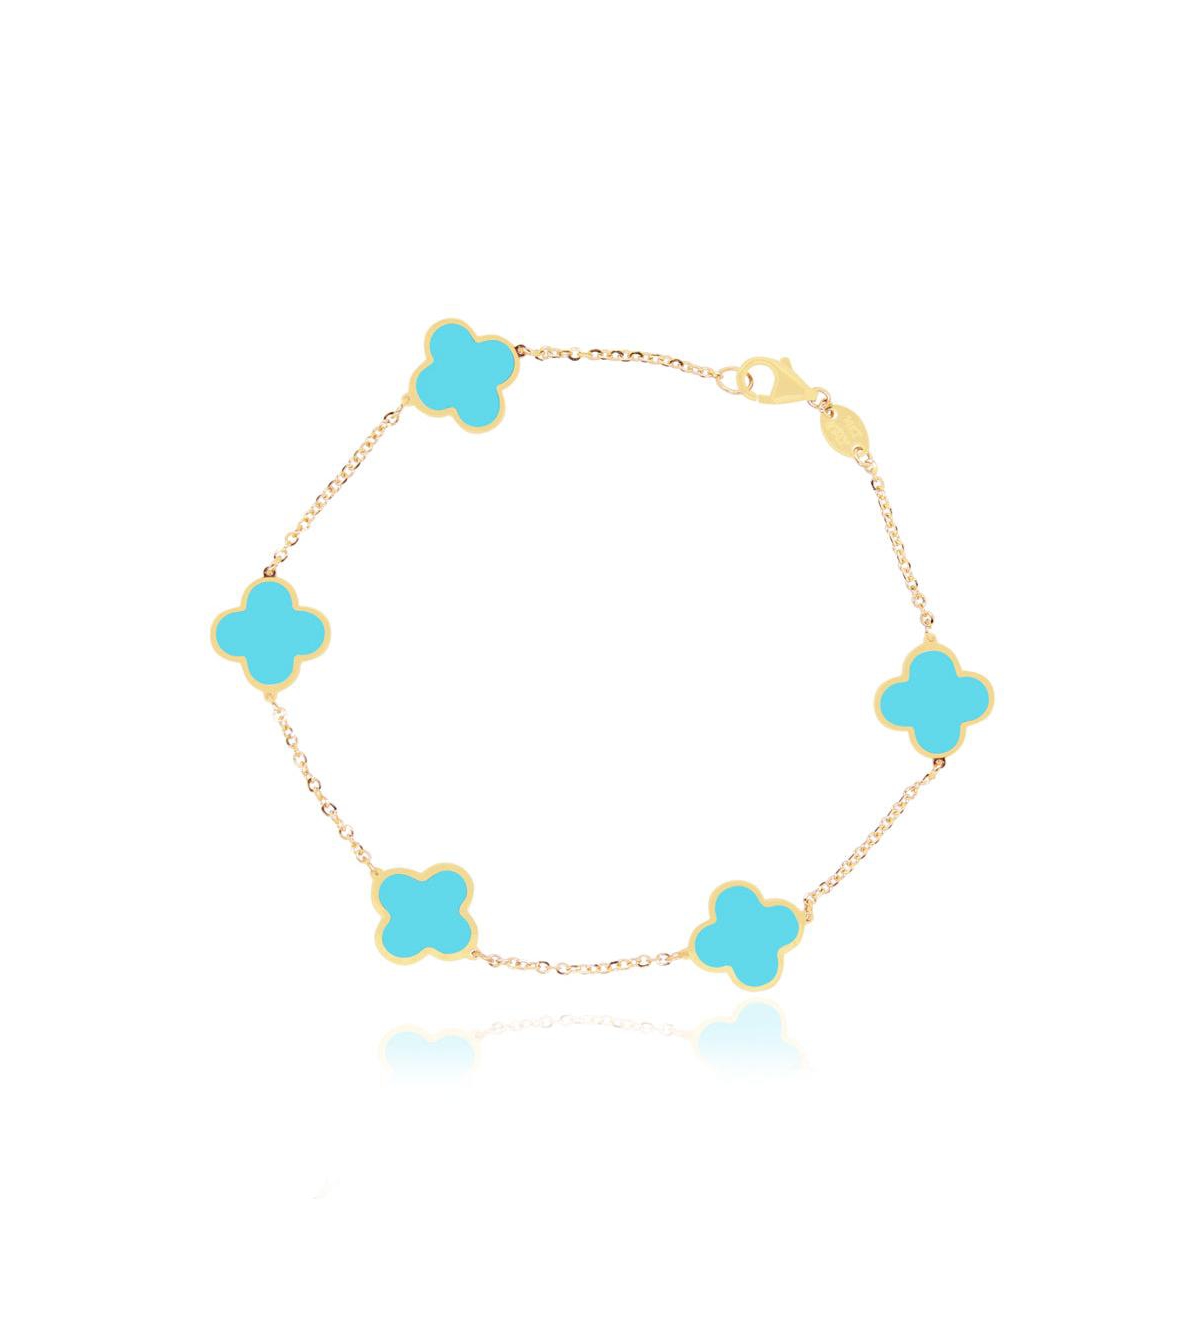 Small Turquoise Clover Bracelet - Turquoise/aqua